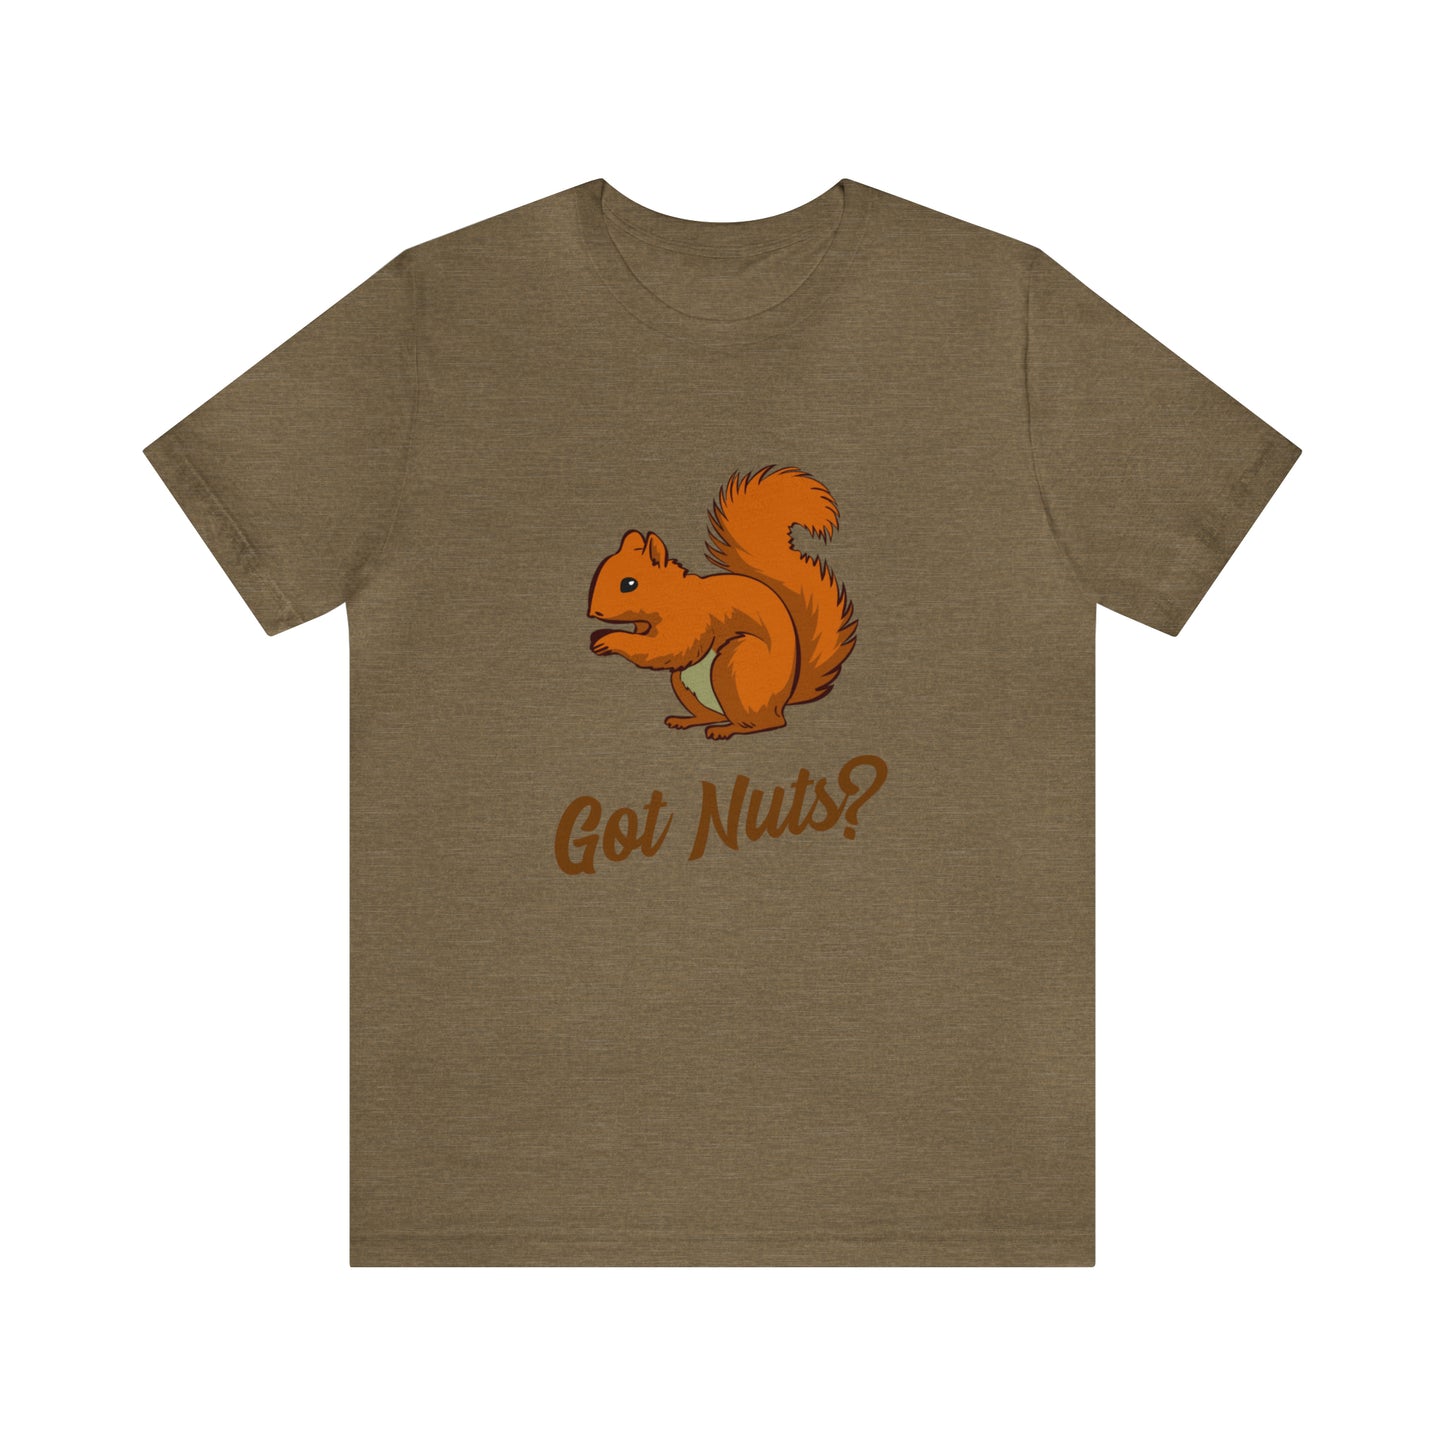 Got Nuts? 2 - Unisex T-Shirt